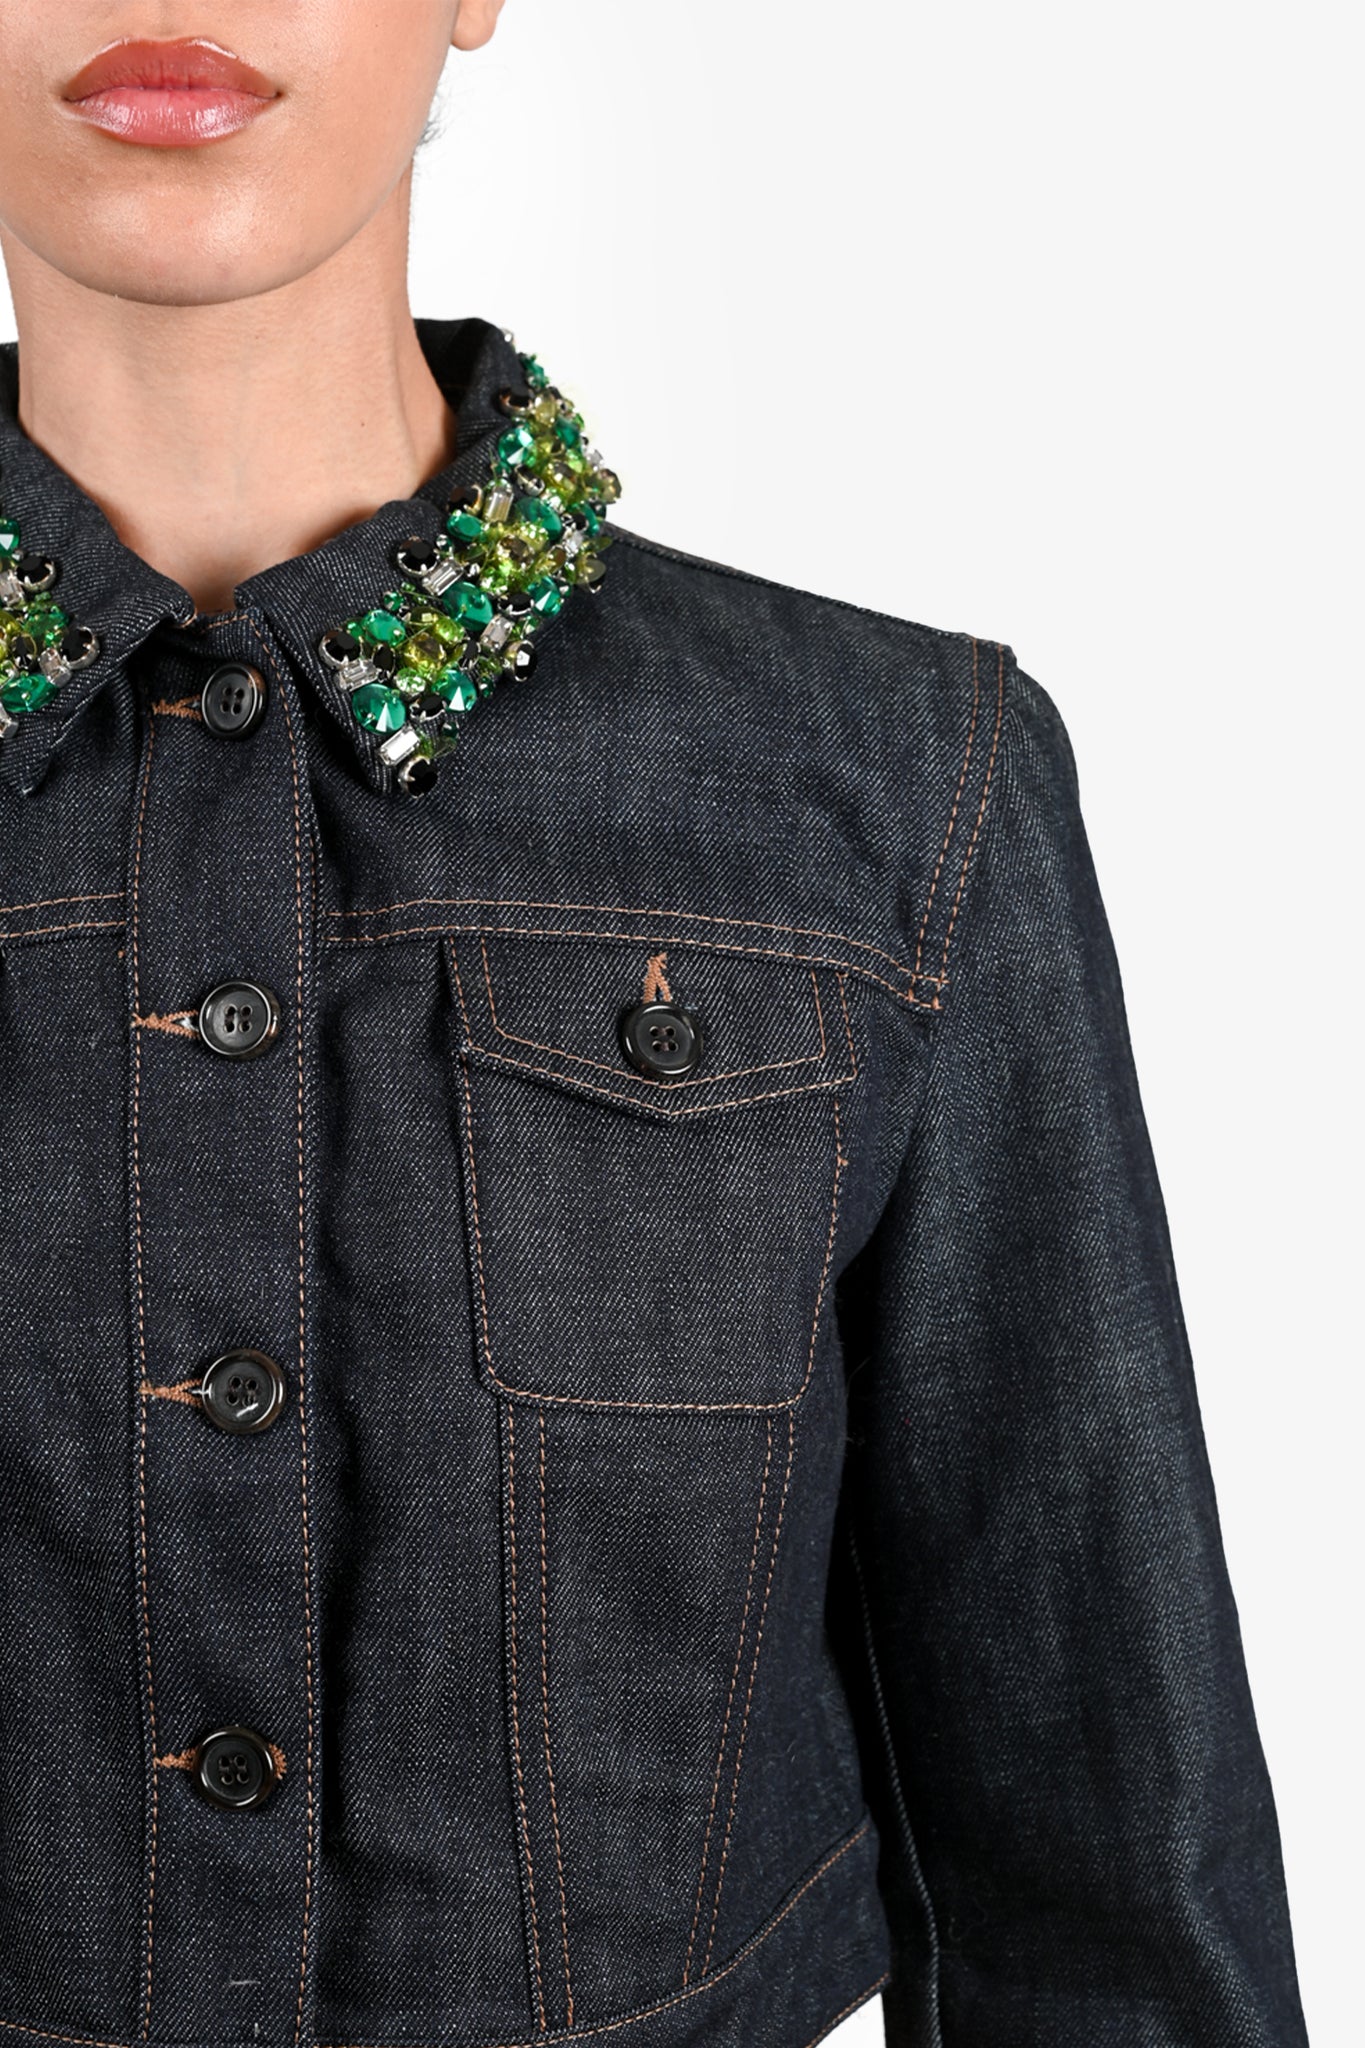 Miu Miu Dark Wash Denim Green Crystal Collar Cropped Jacket Size 42